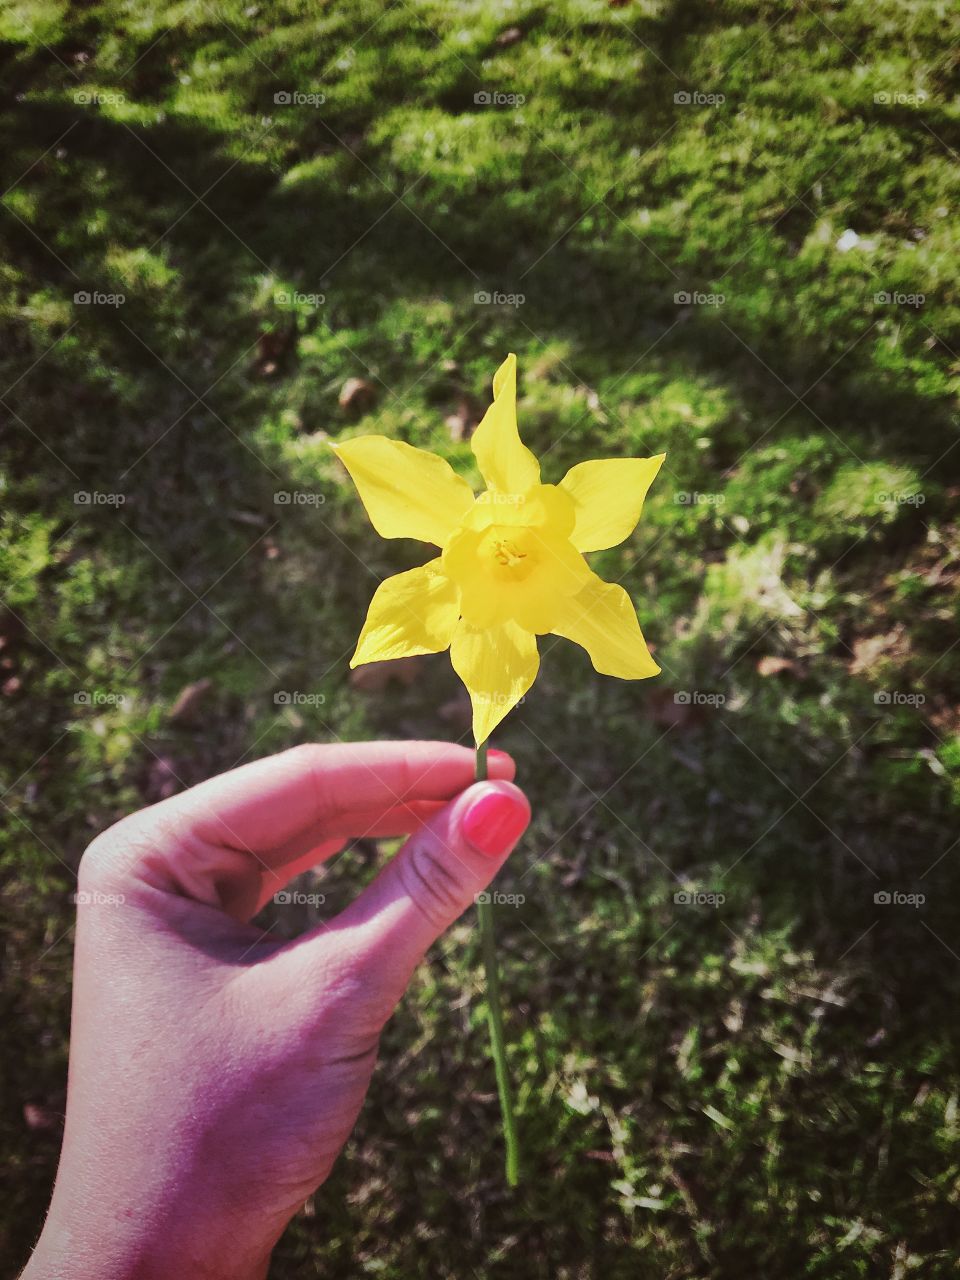 Enjoying the daffodils 🌼 